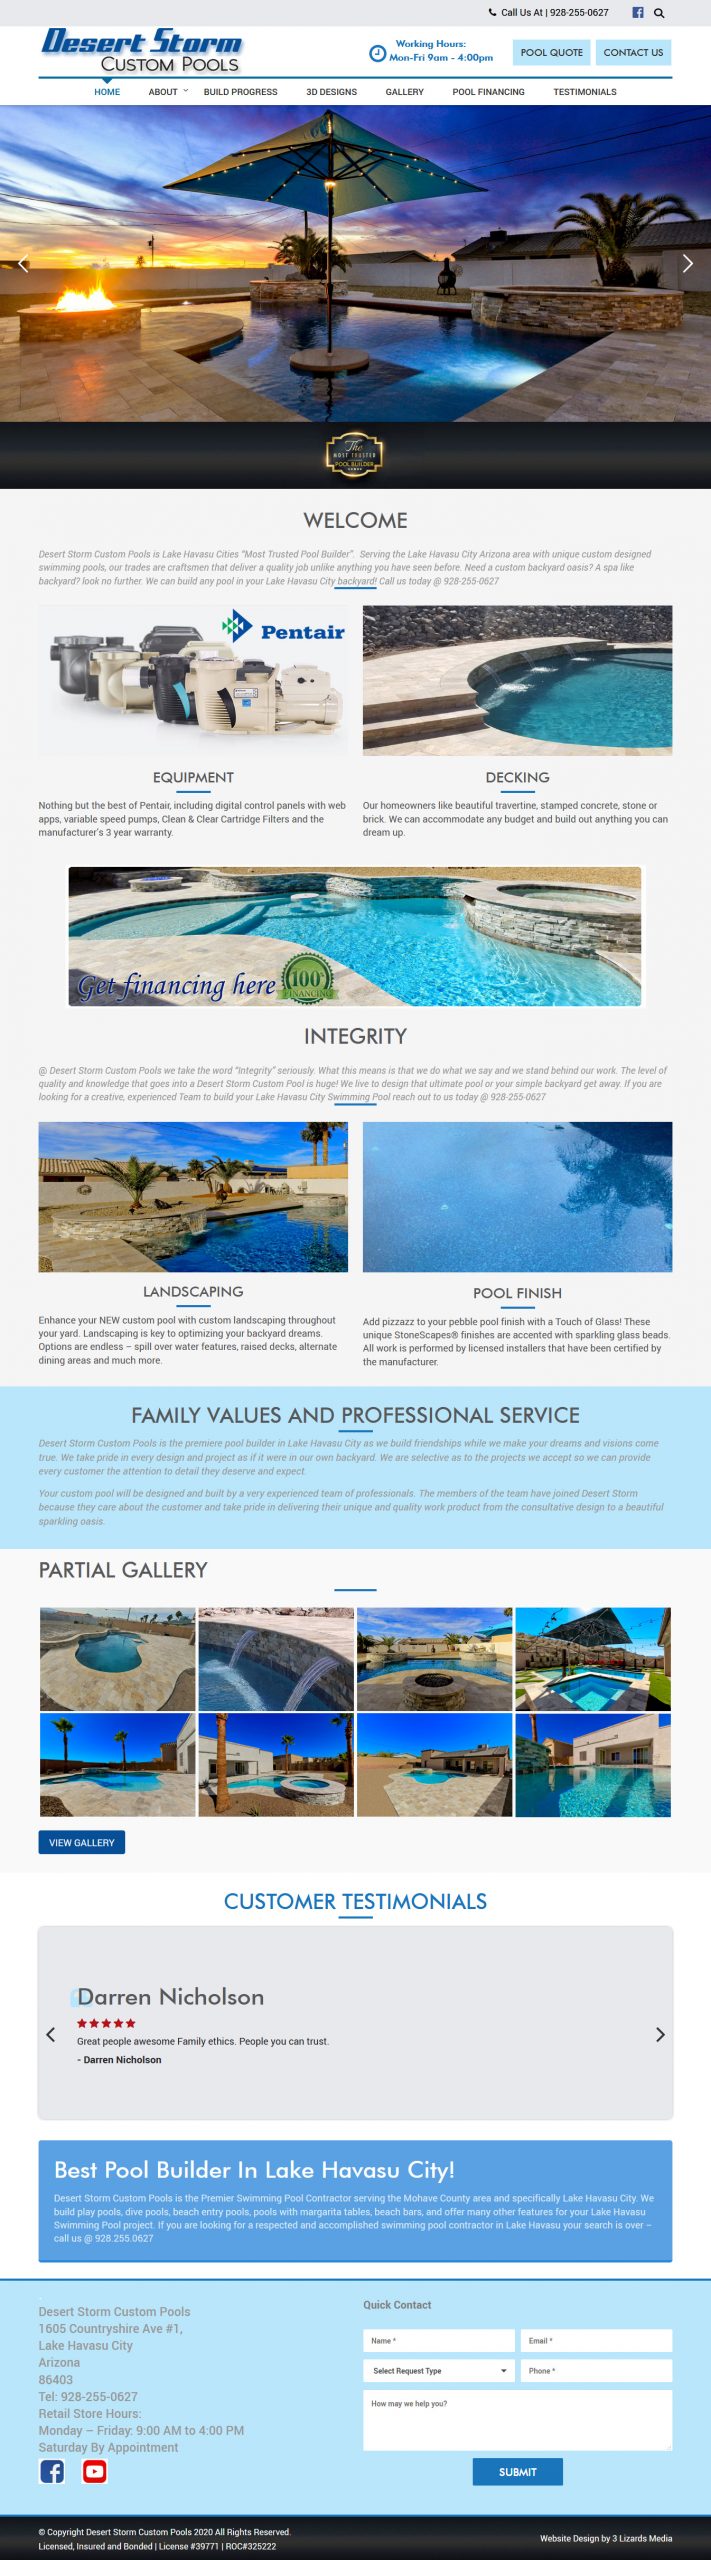 Desert Storm Website Design